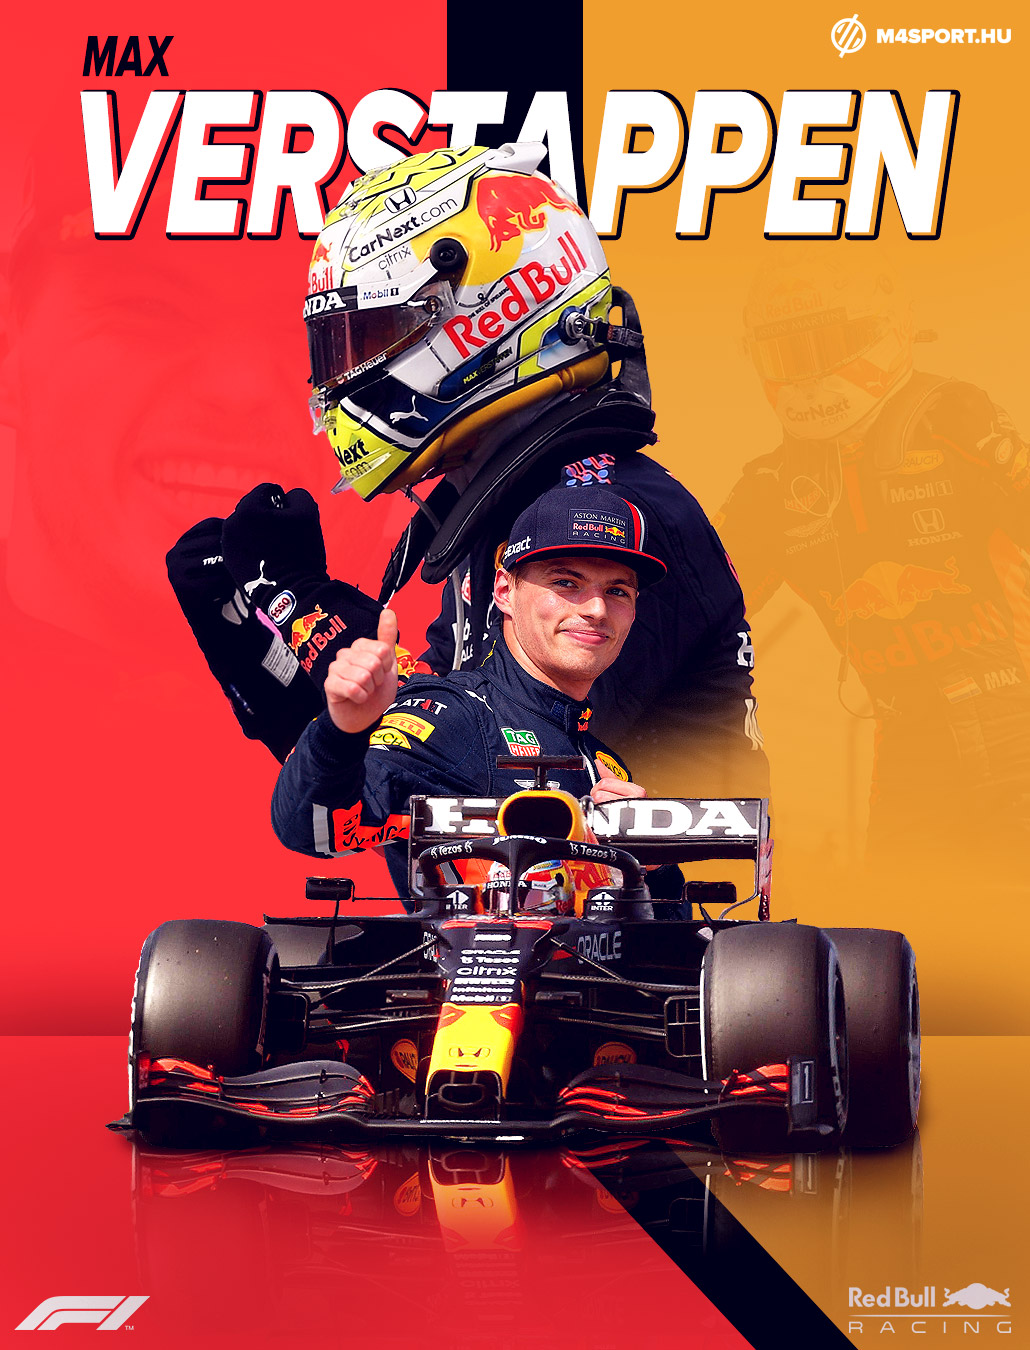 Max Verstappen, noul campion mondial în Formula 1